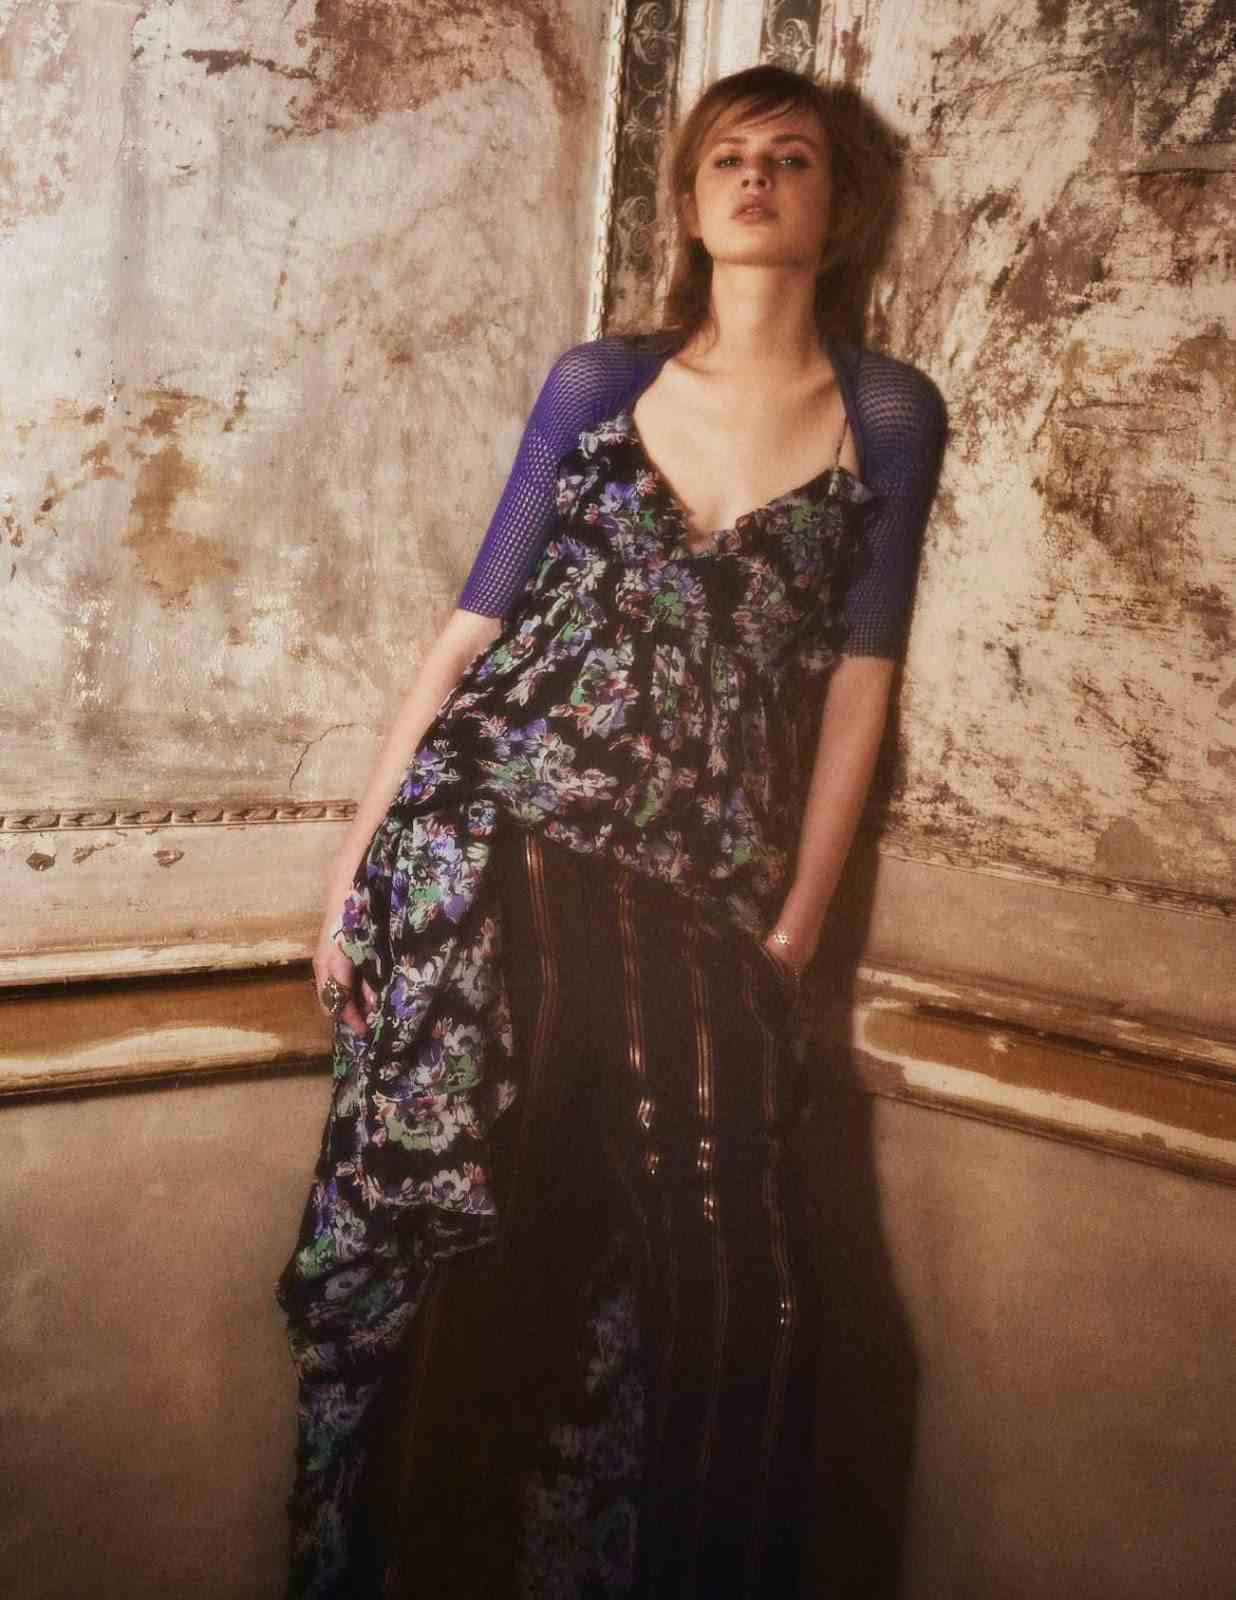 ELLE FRANCE - February 2017
Photographer: Serge Leblon
Model: Anna Lund
Stylist: Tamara Taichman
Location: Palermo, Italy